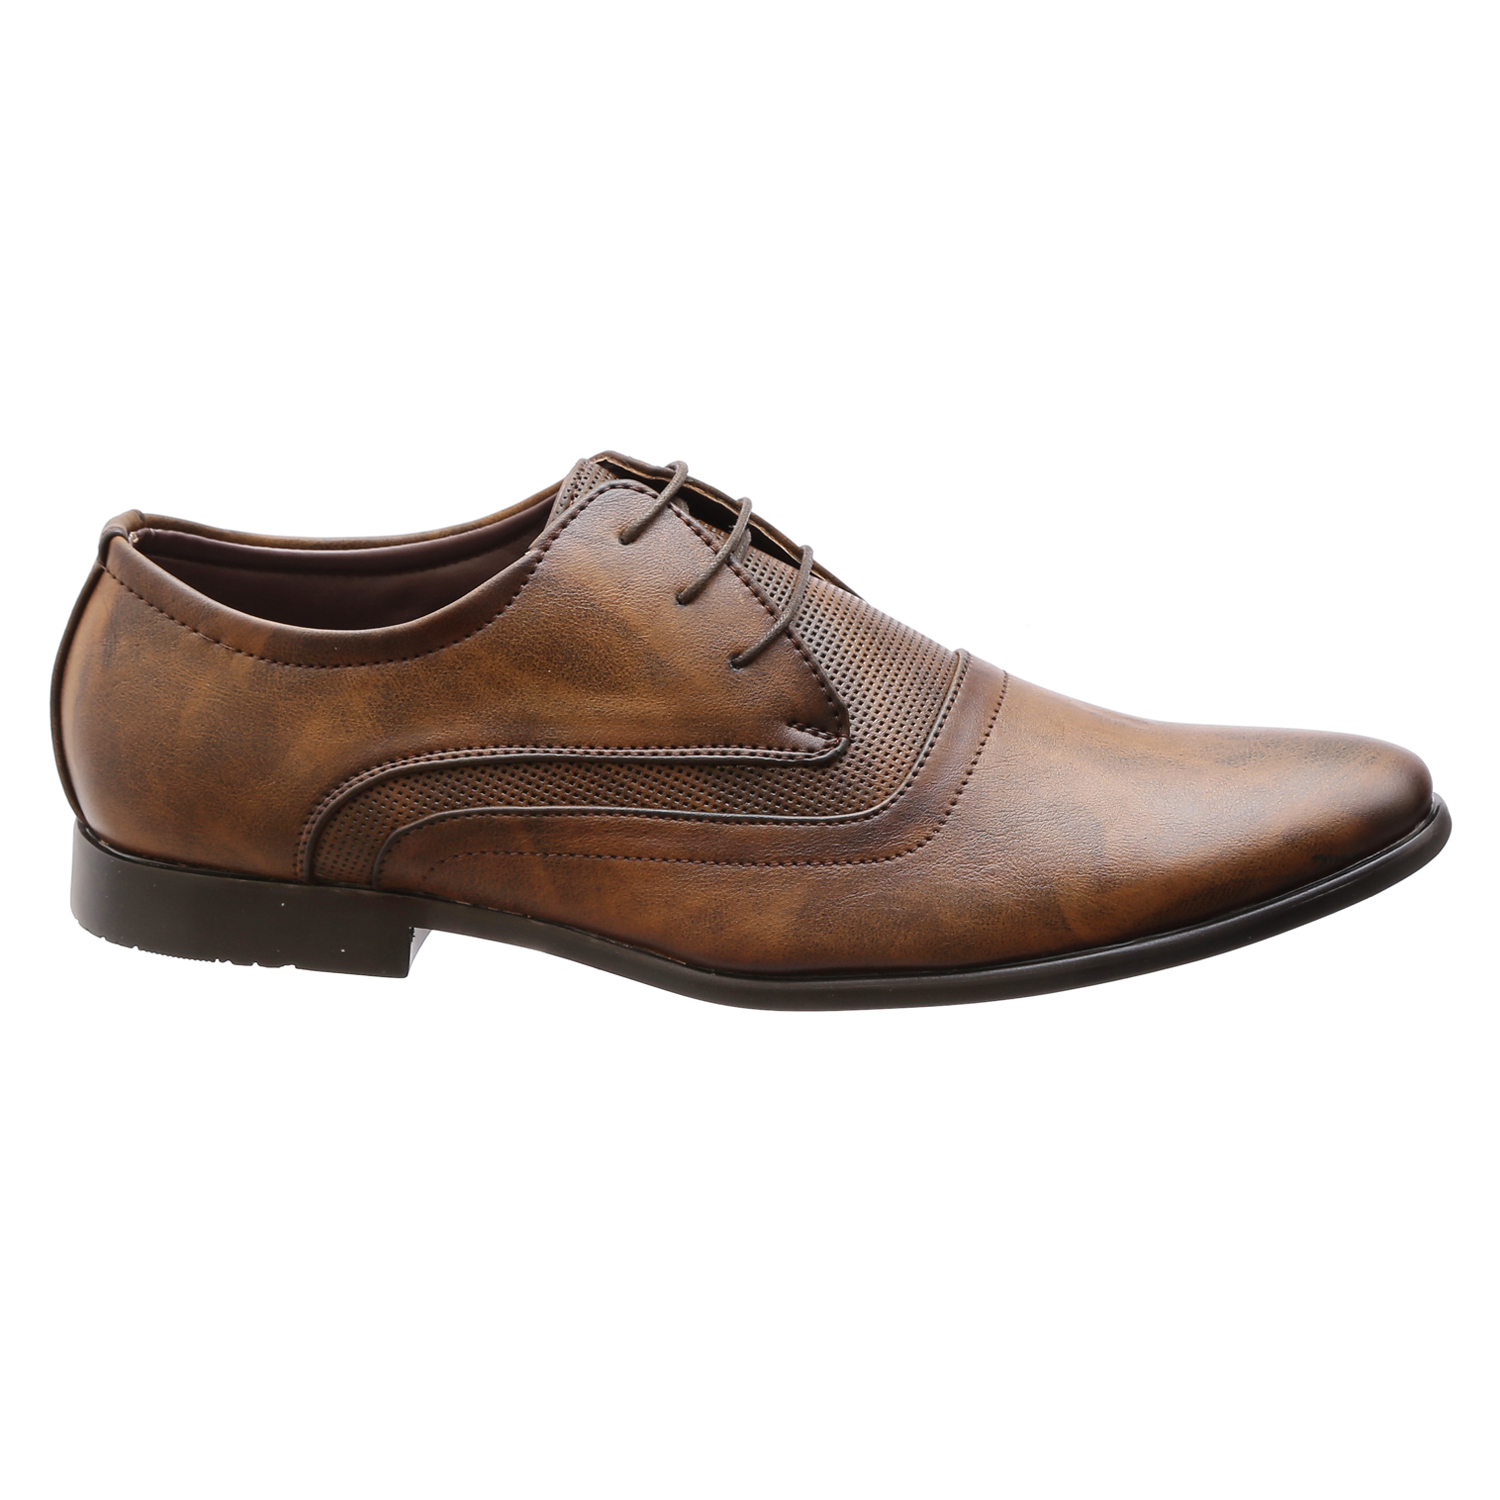 Buy lapadi formal shoe for men Online @ ₹1199 from ShopClues